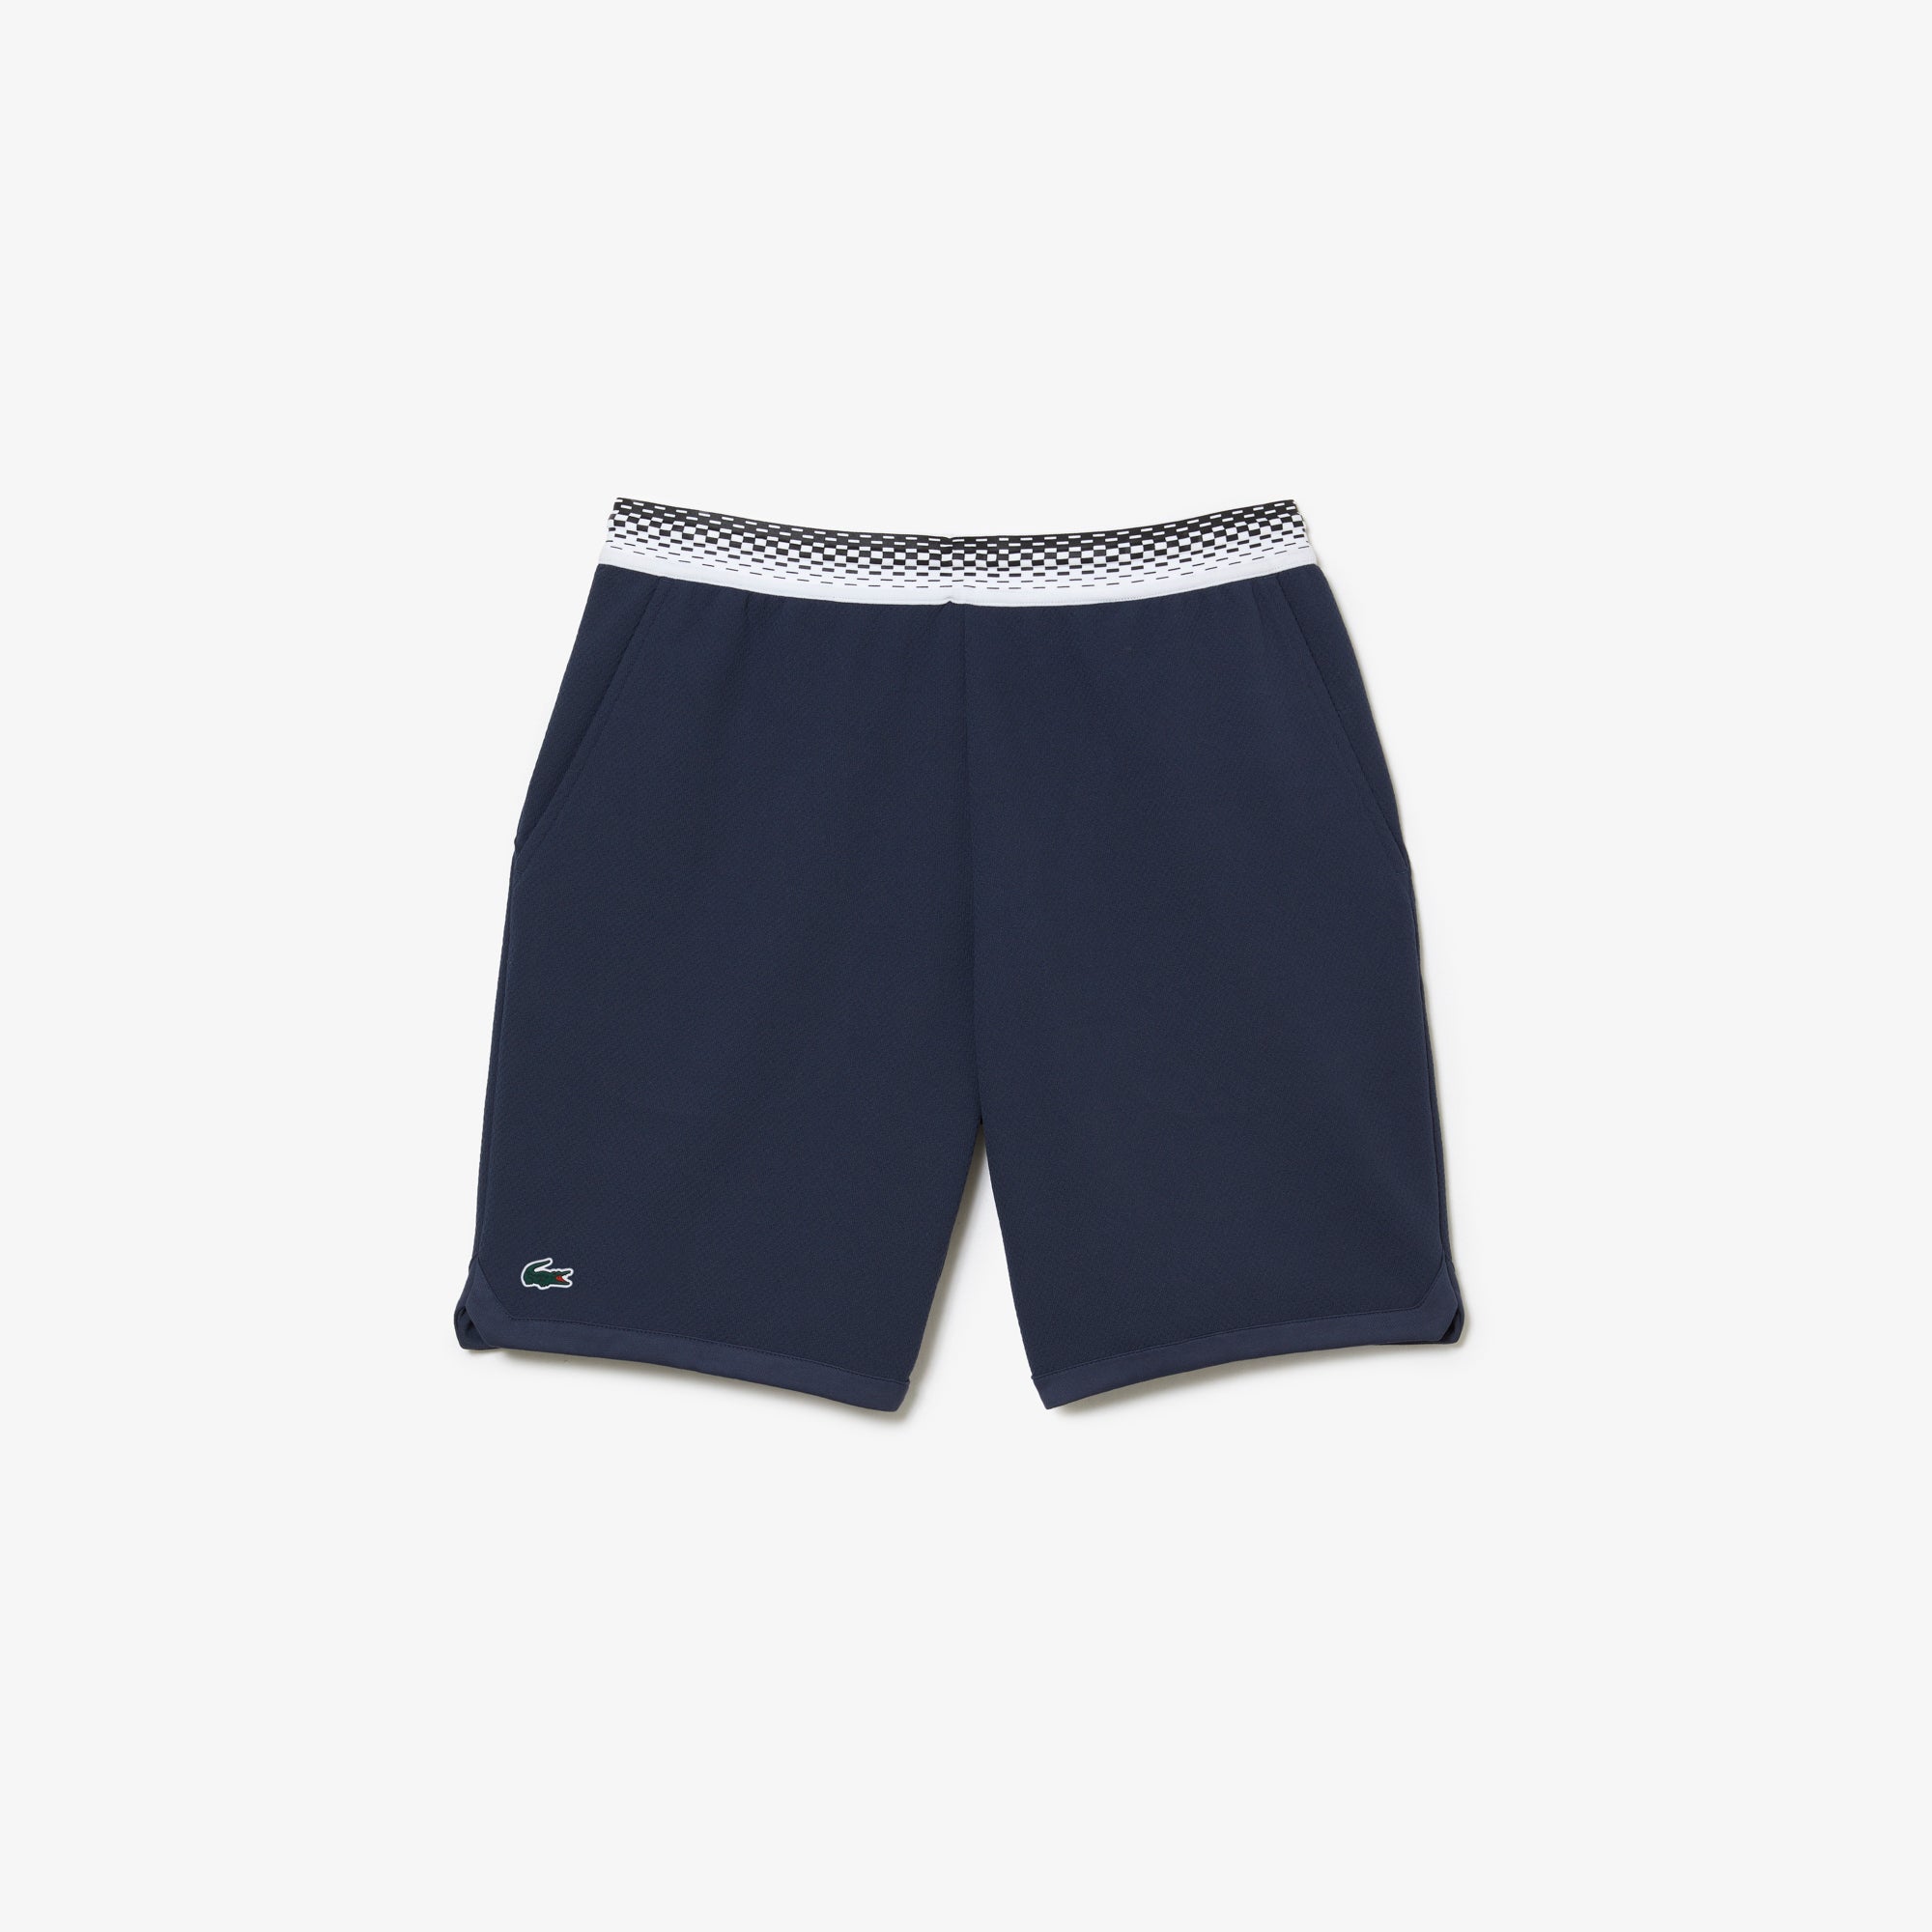 Lacoste Shorts (Night Blue) - S